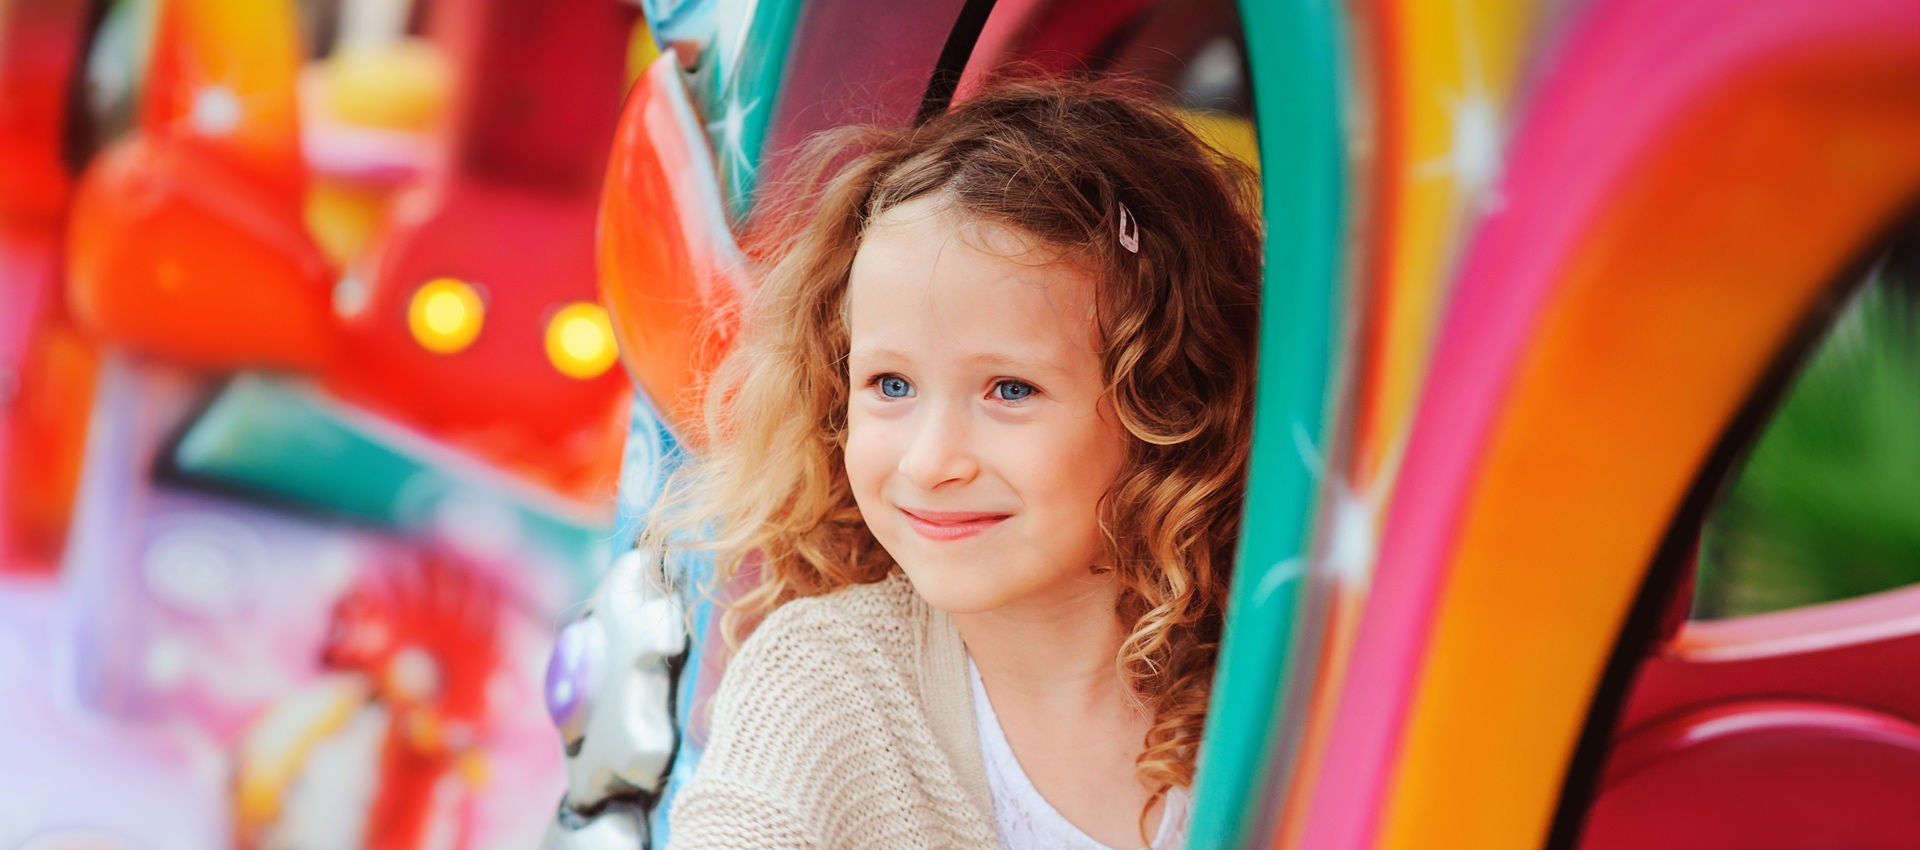 A young girl enjoys a ride at an amusement park.